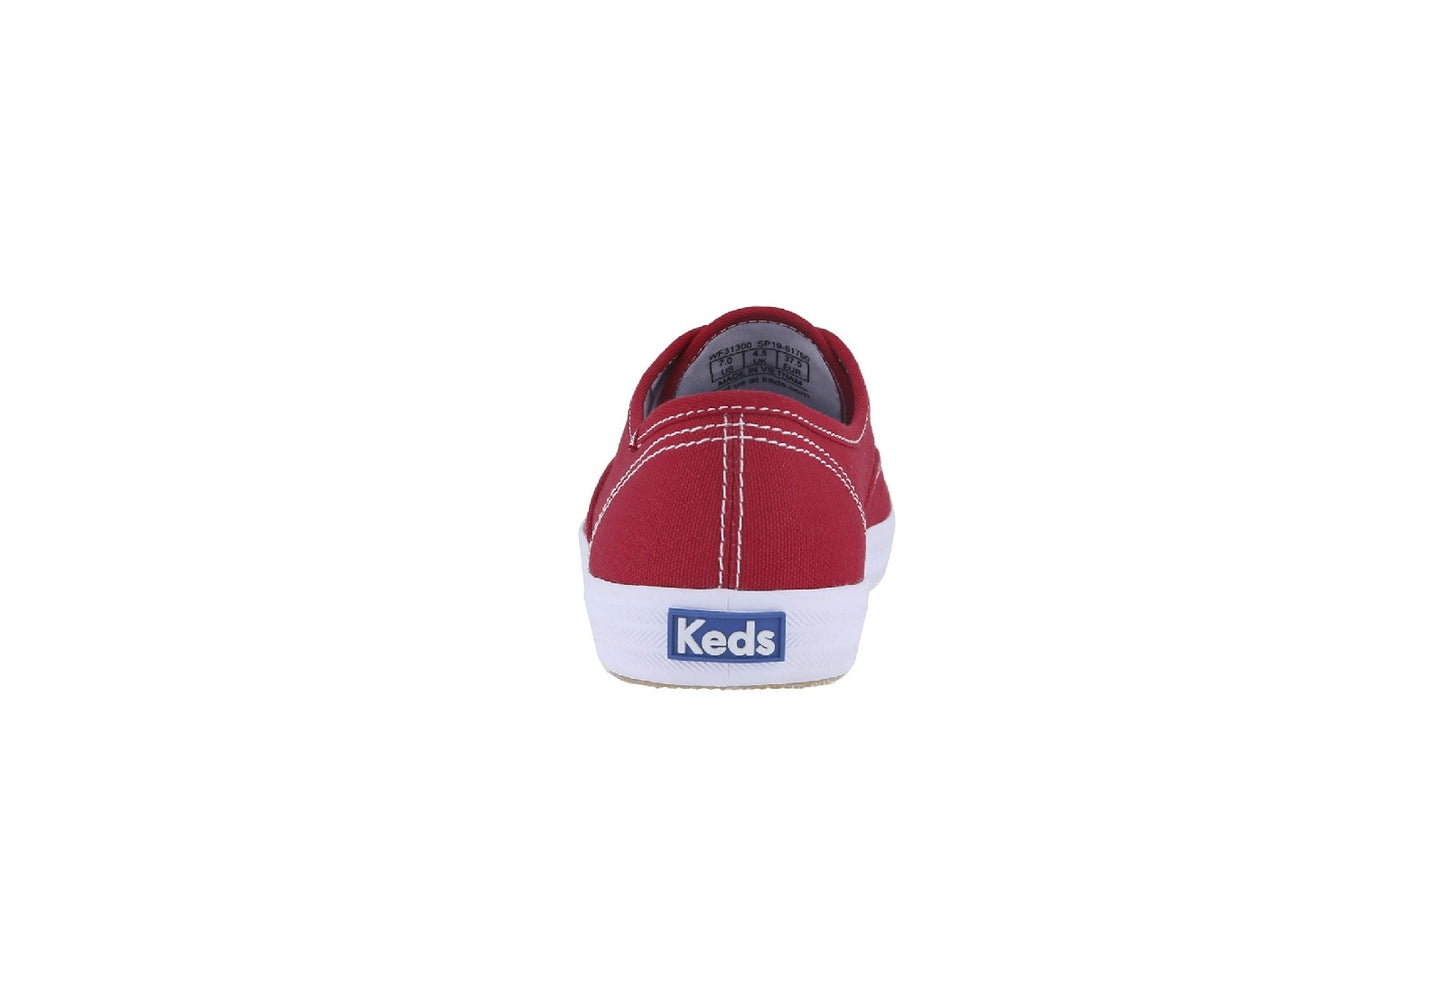 Keds Women's Champion Originals Canvas Sneaker, Red